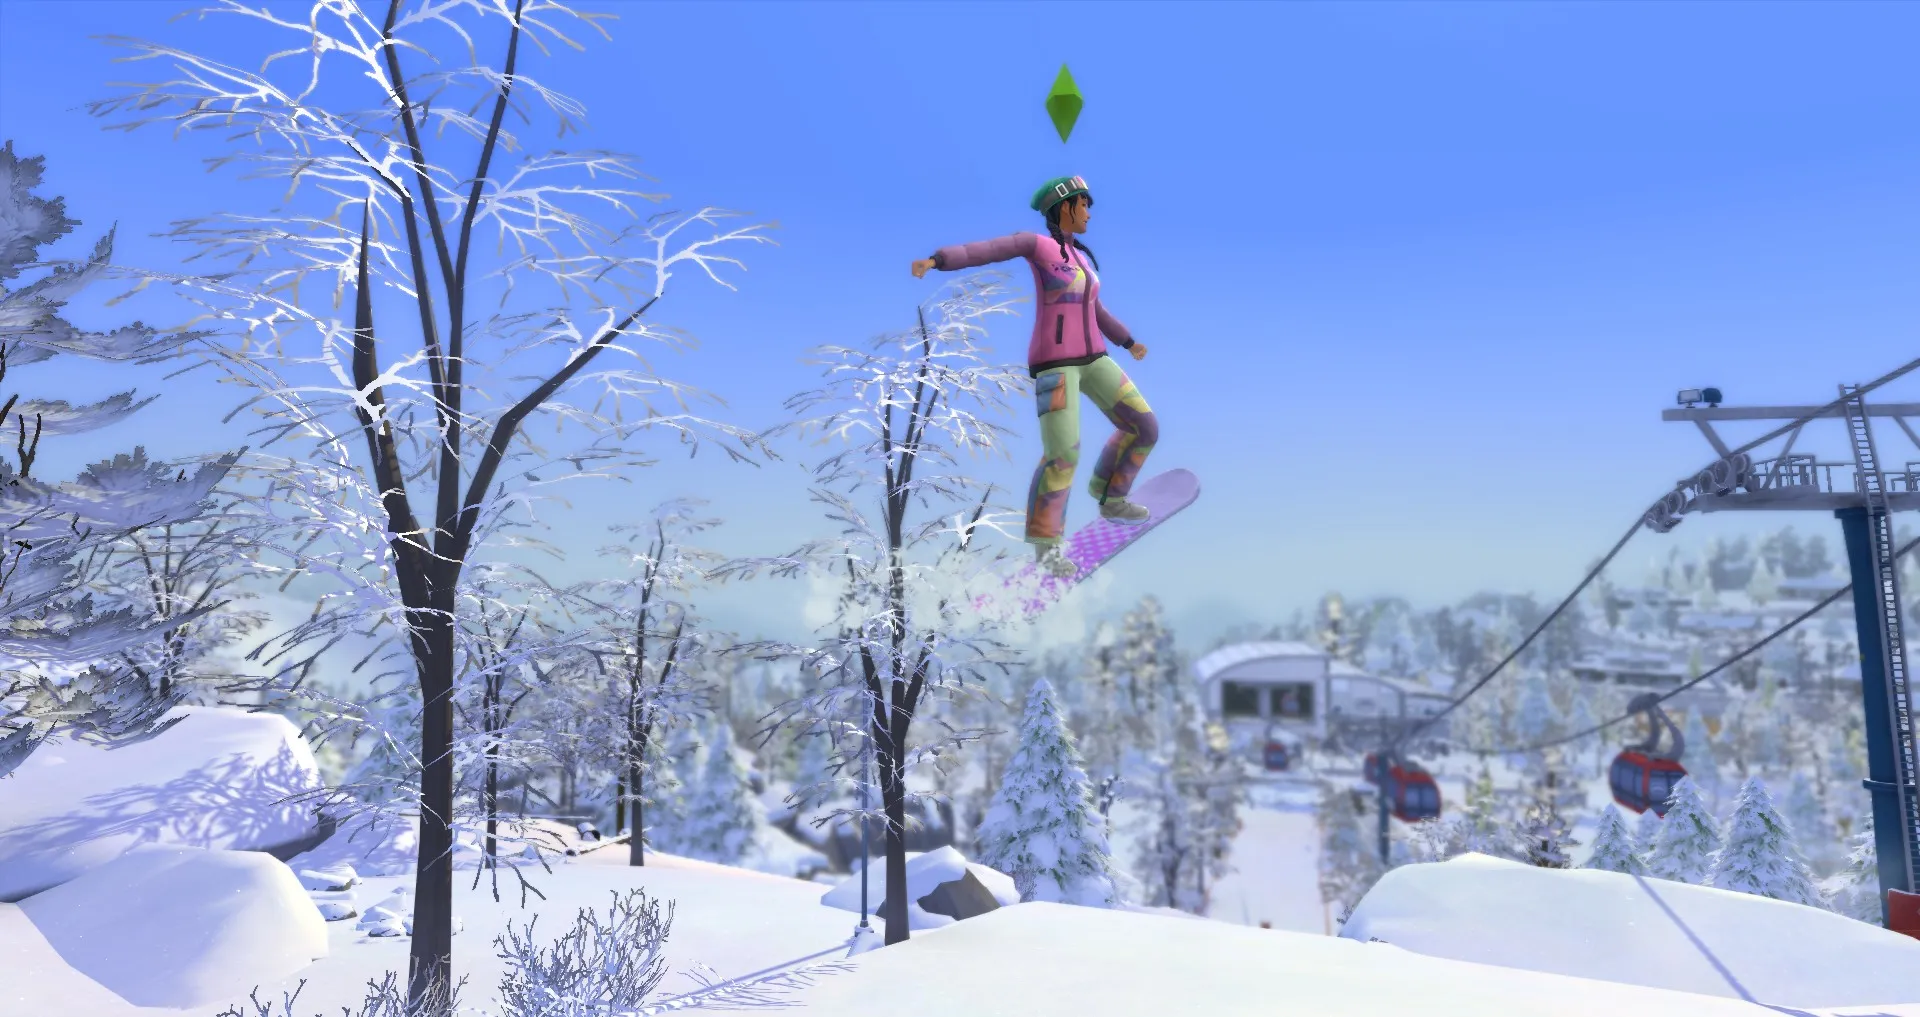 The Sims 4 Snowy Escape 스노우보드 실력 스킬을 가진 여성 Sim이 공중에 떠있으며 동작하고 있습니다.